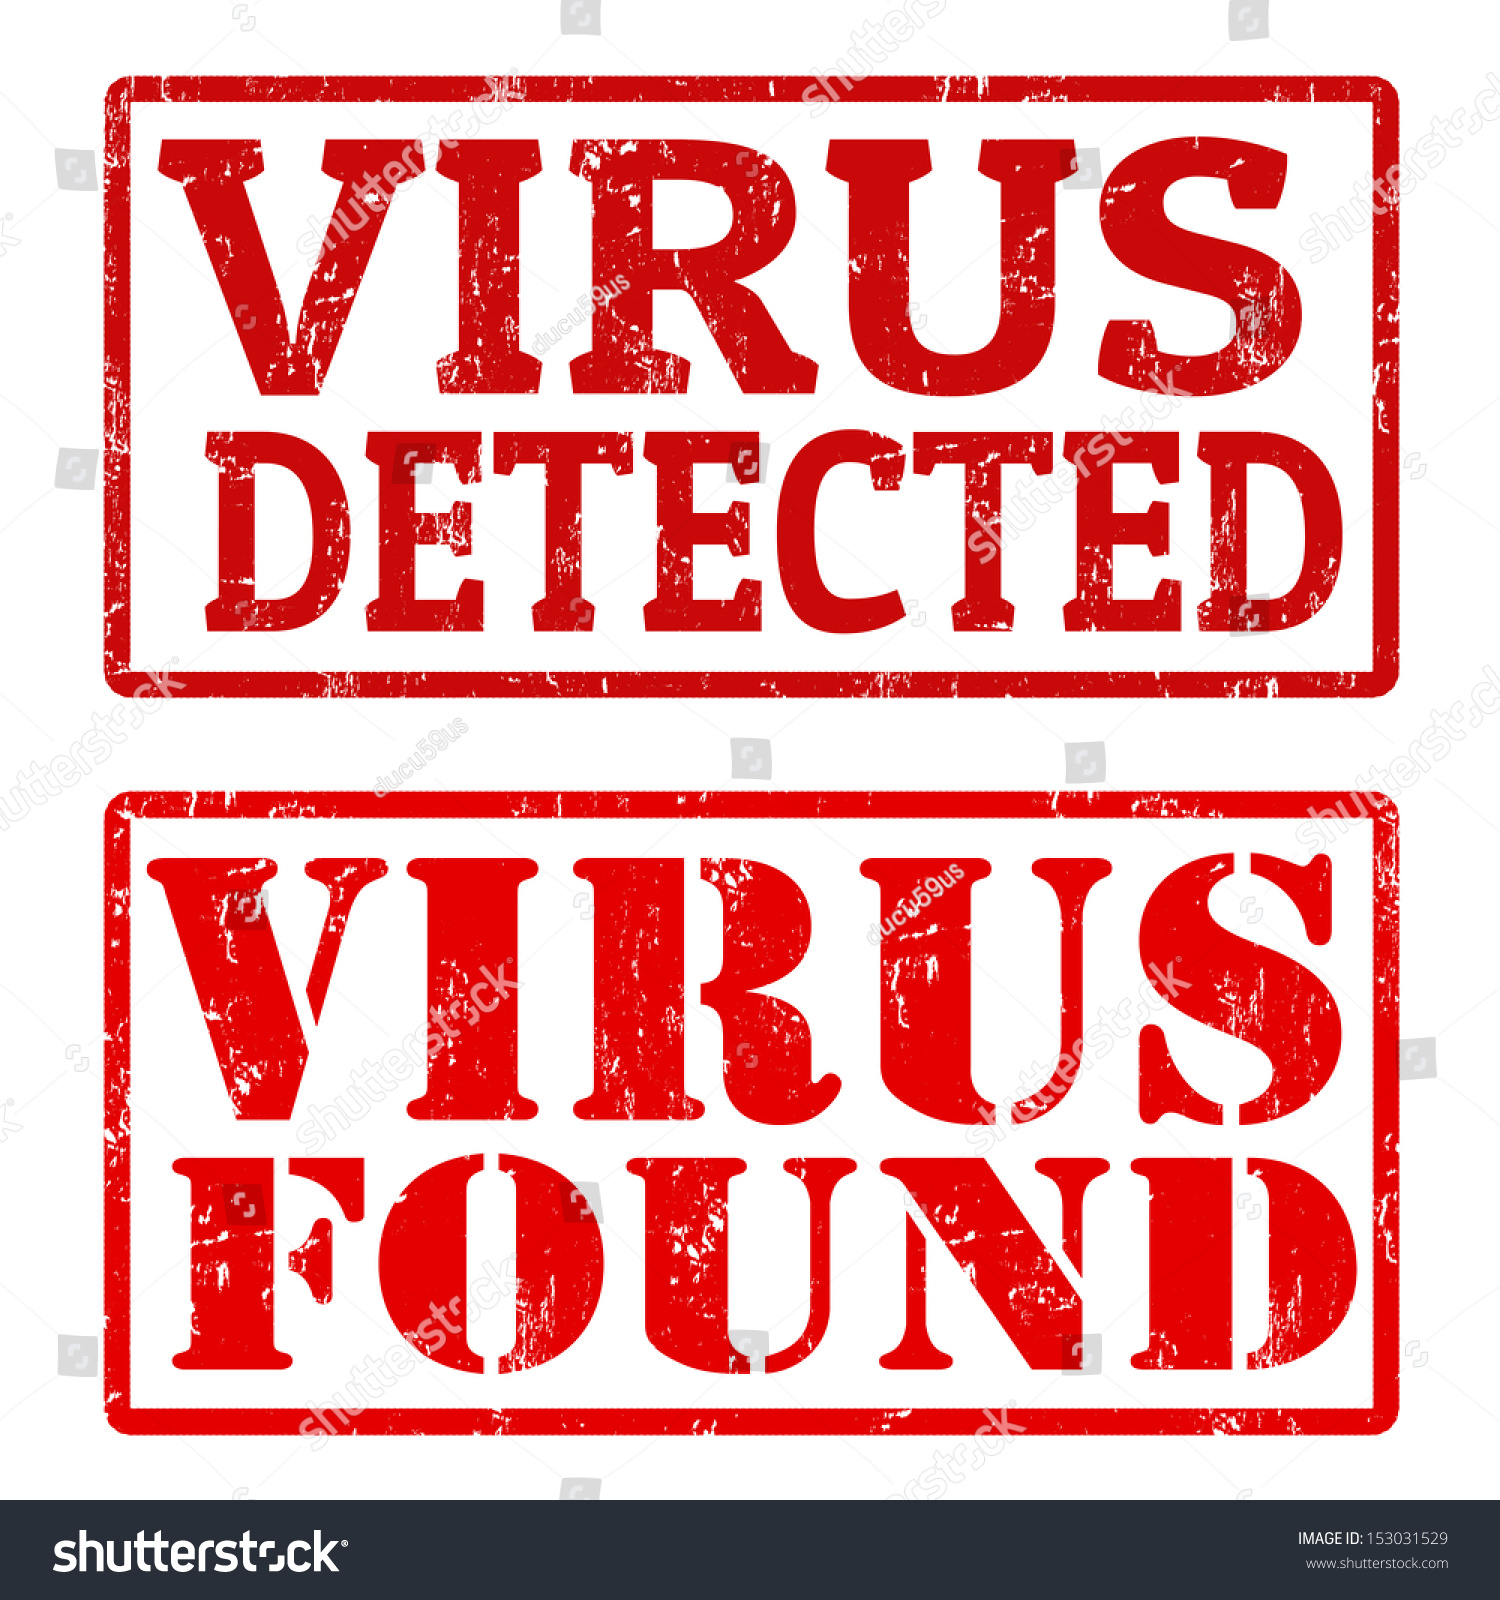 Текст viruses. Virus detected. Virus detected logo. Testorone virus text caption. Not text virus.